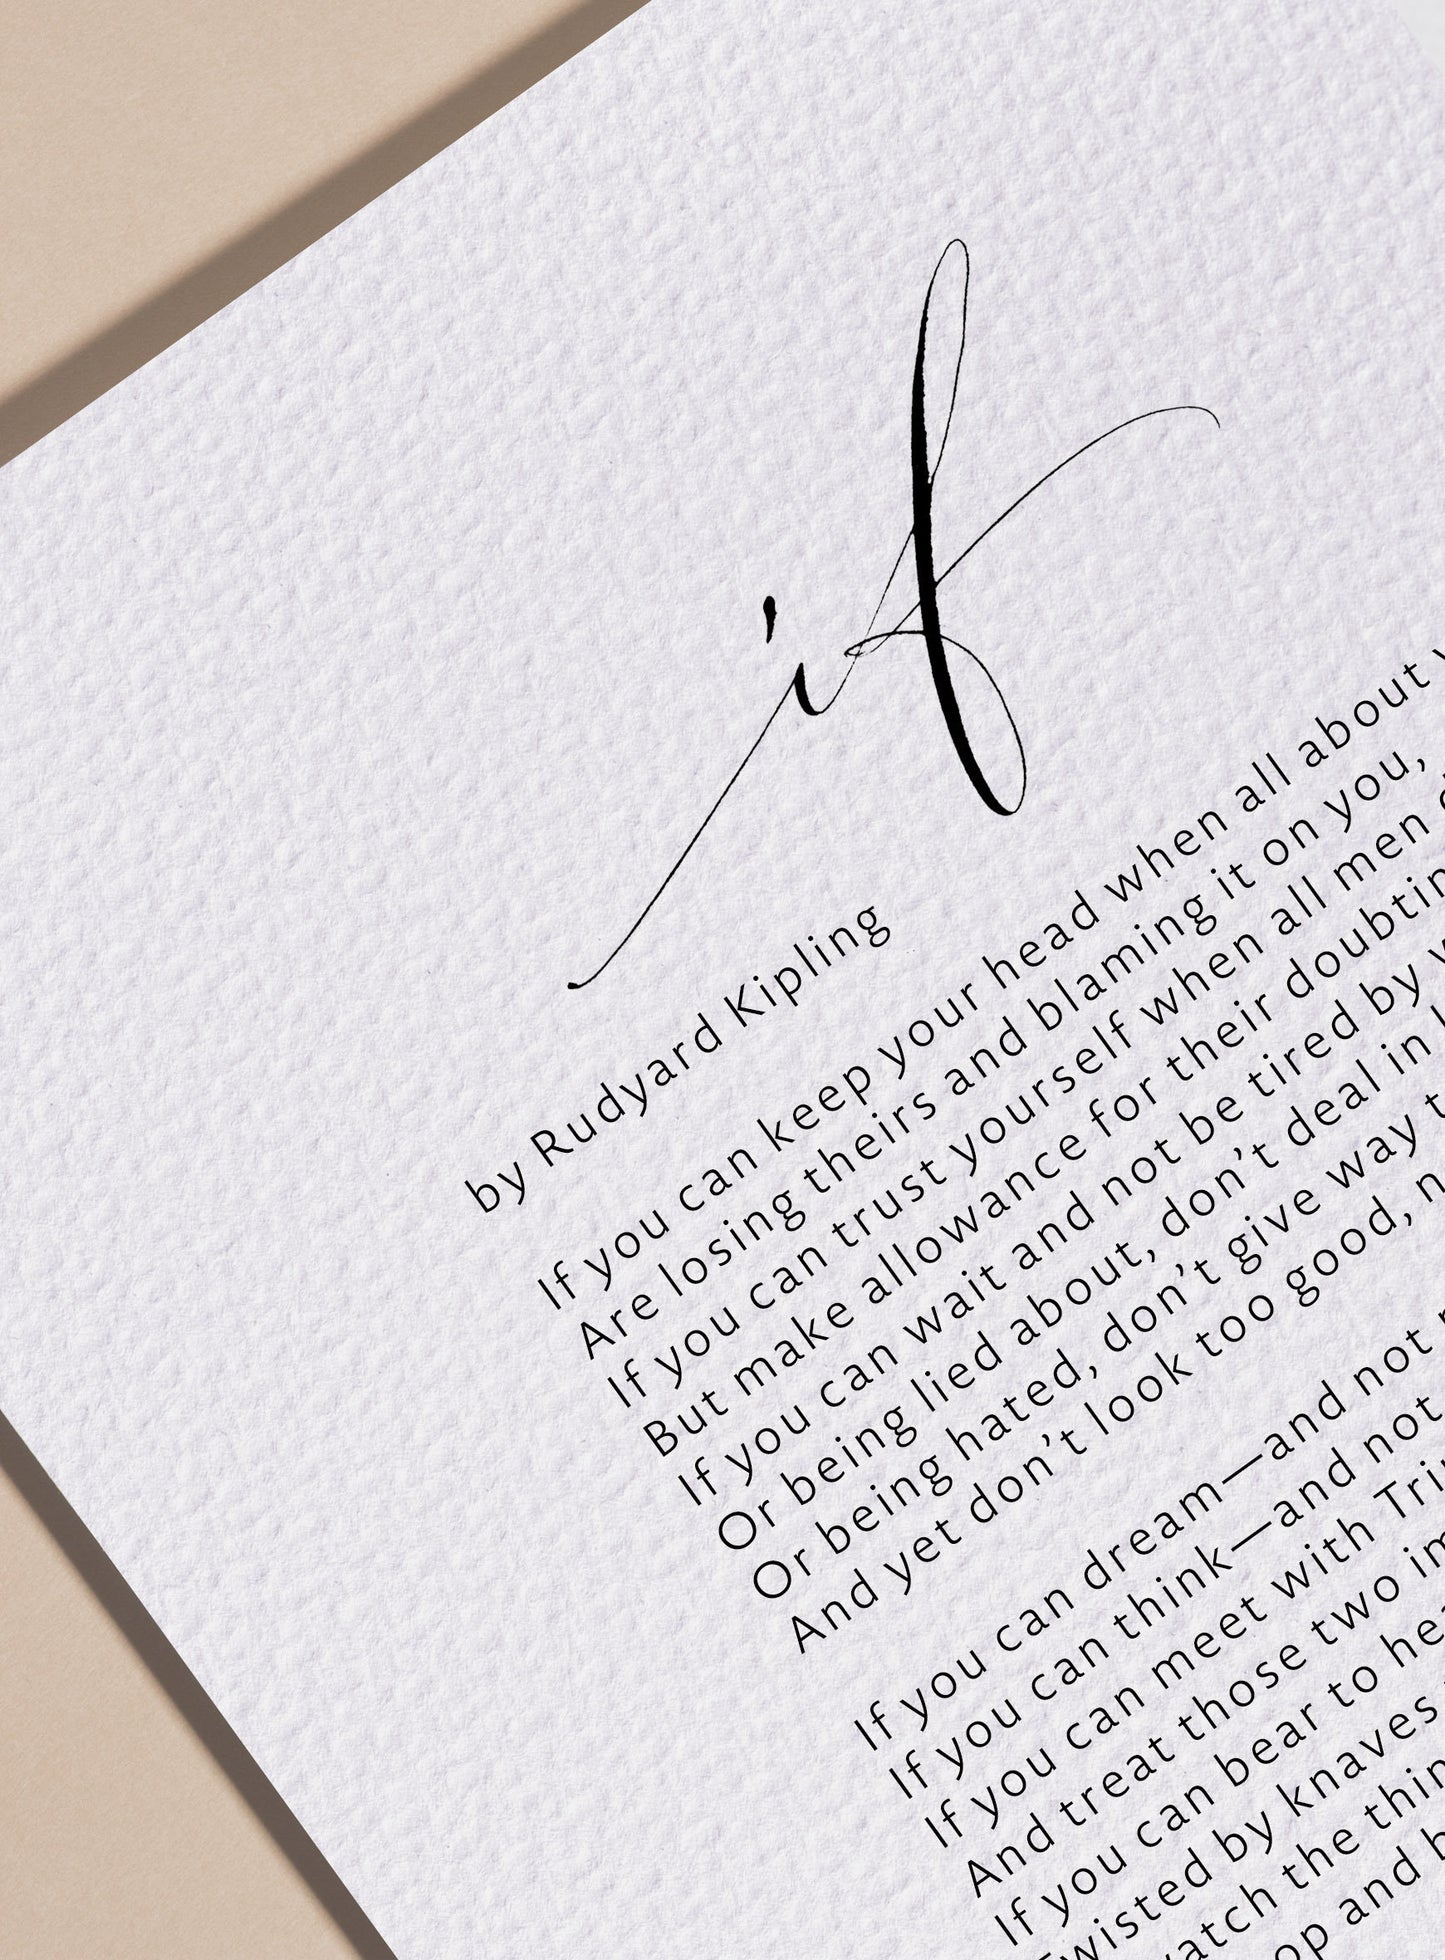 IF - Rudyard Kipling Poem Framed - Calligraphy & Typography Print - Gift for son